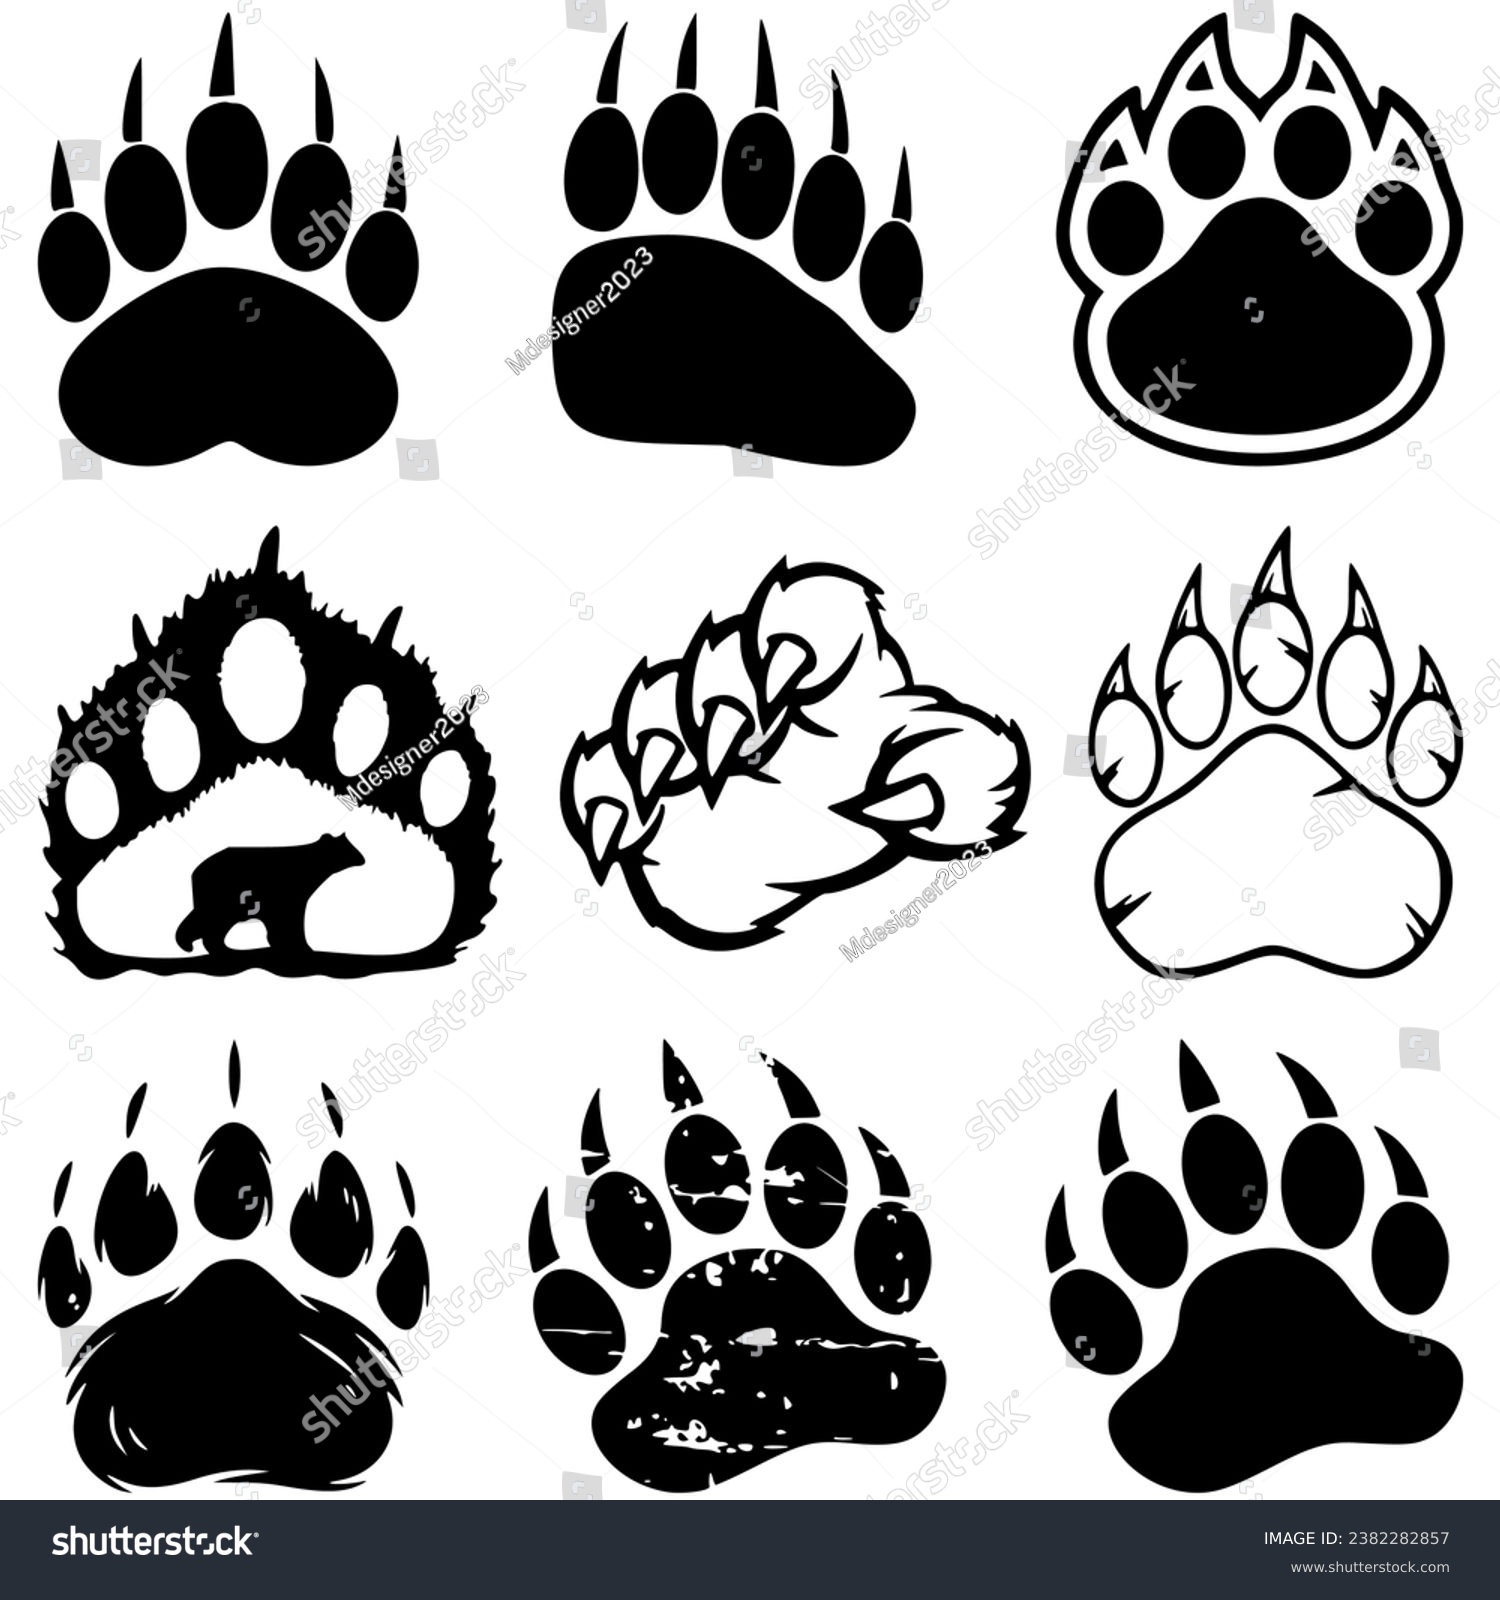 SVG of Bear Claw Silhouettes Set,Bear Claw Vector Image, Bear Paw Silhouettes Set svg